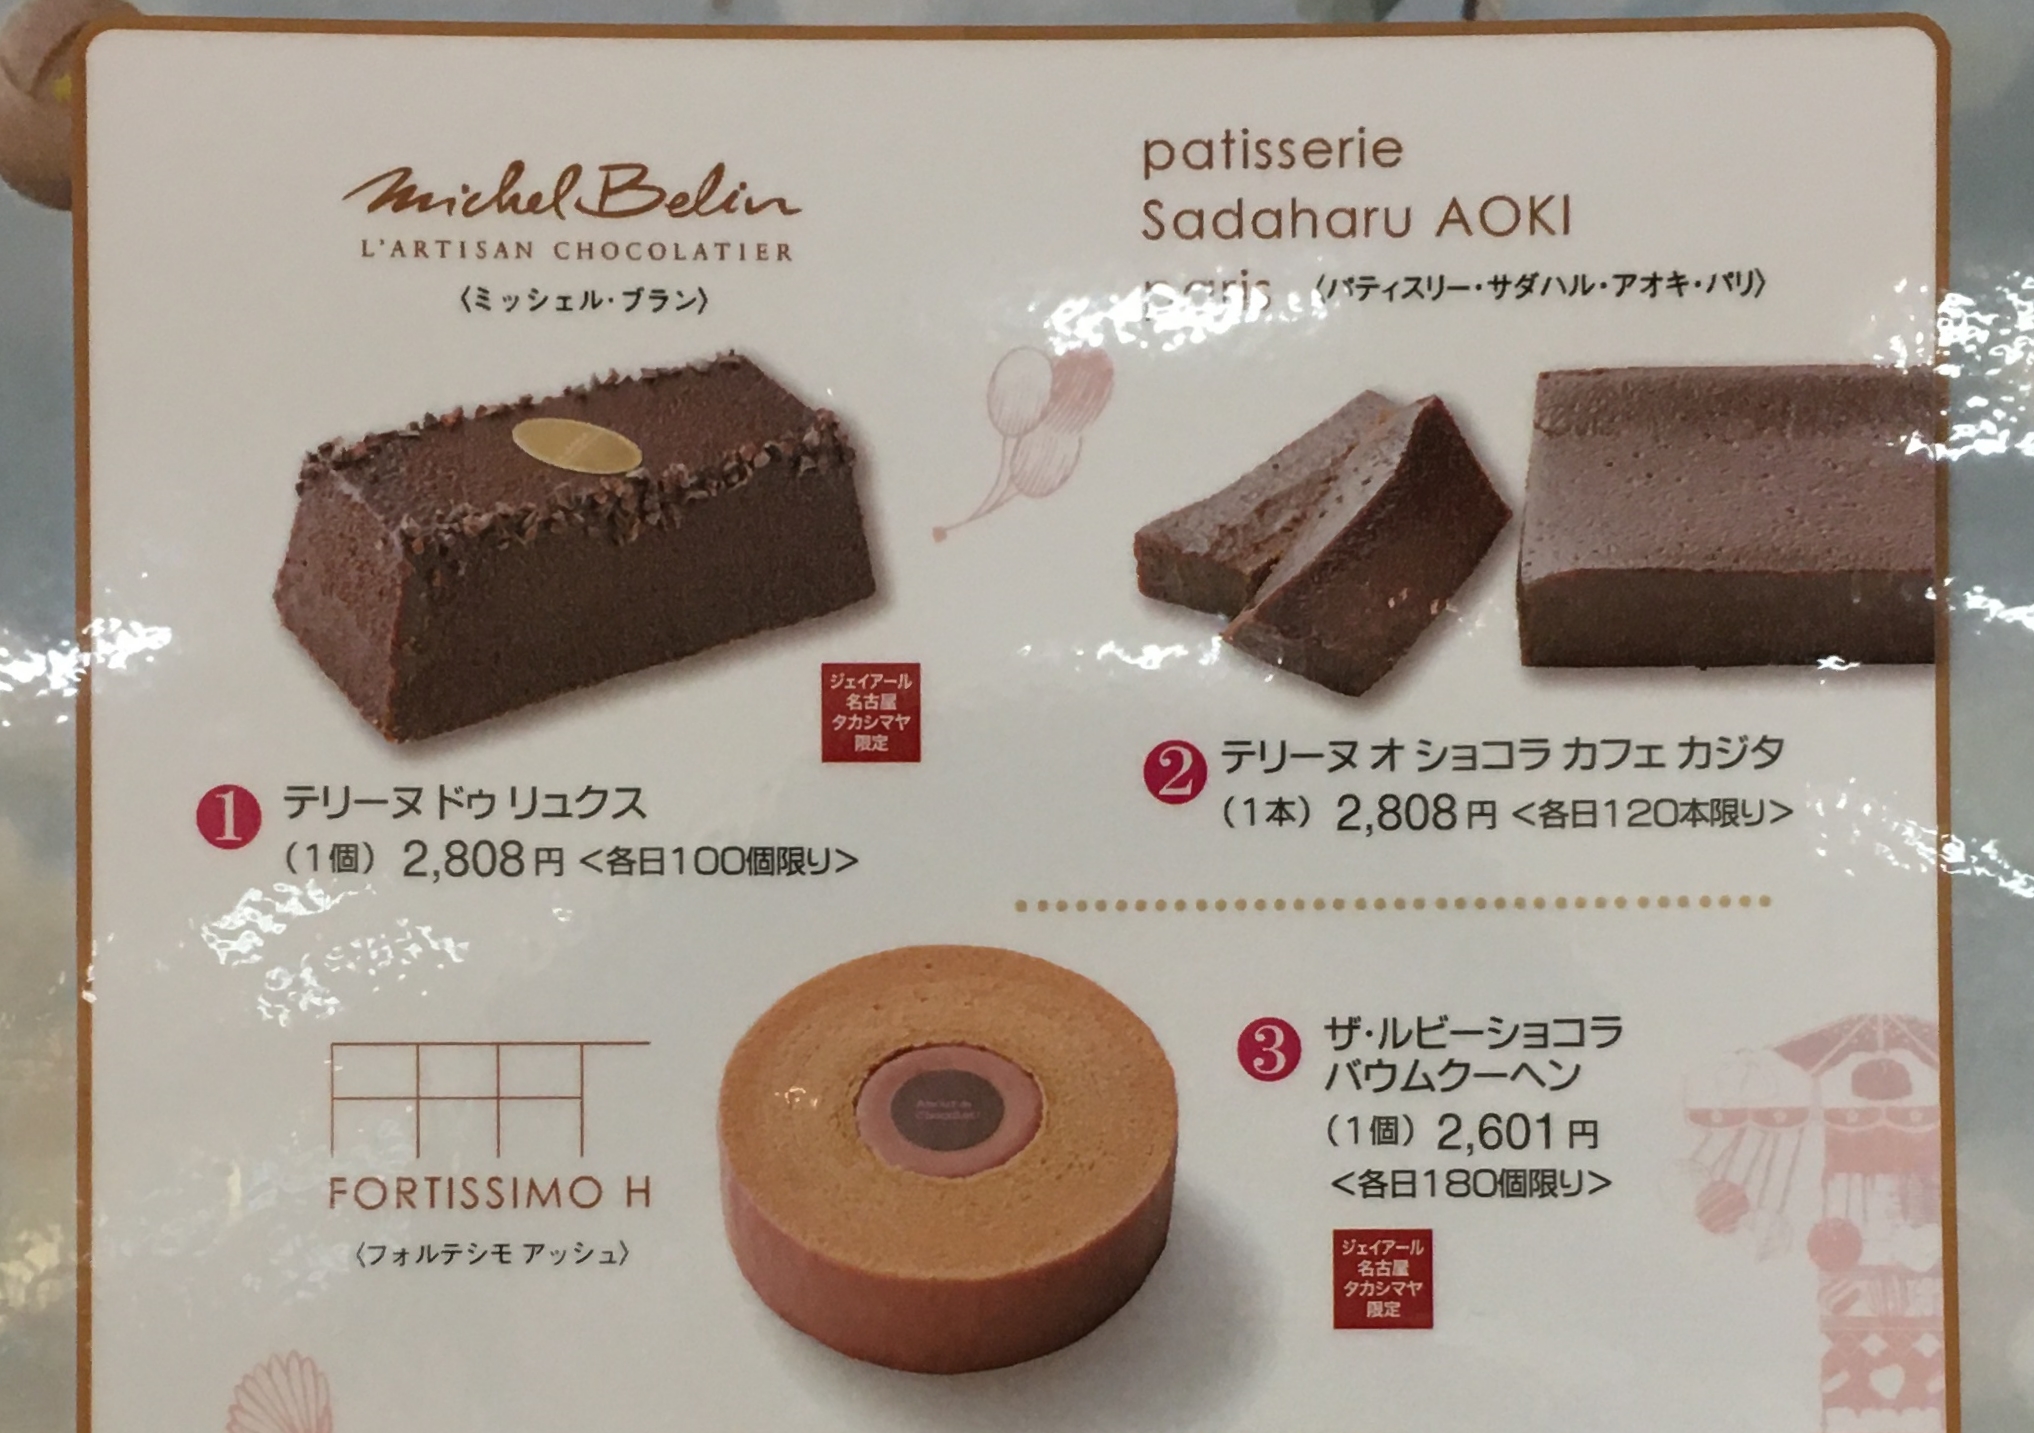 amour-du-chocolat-limited-item